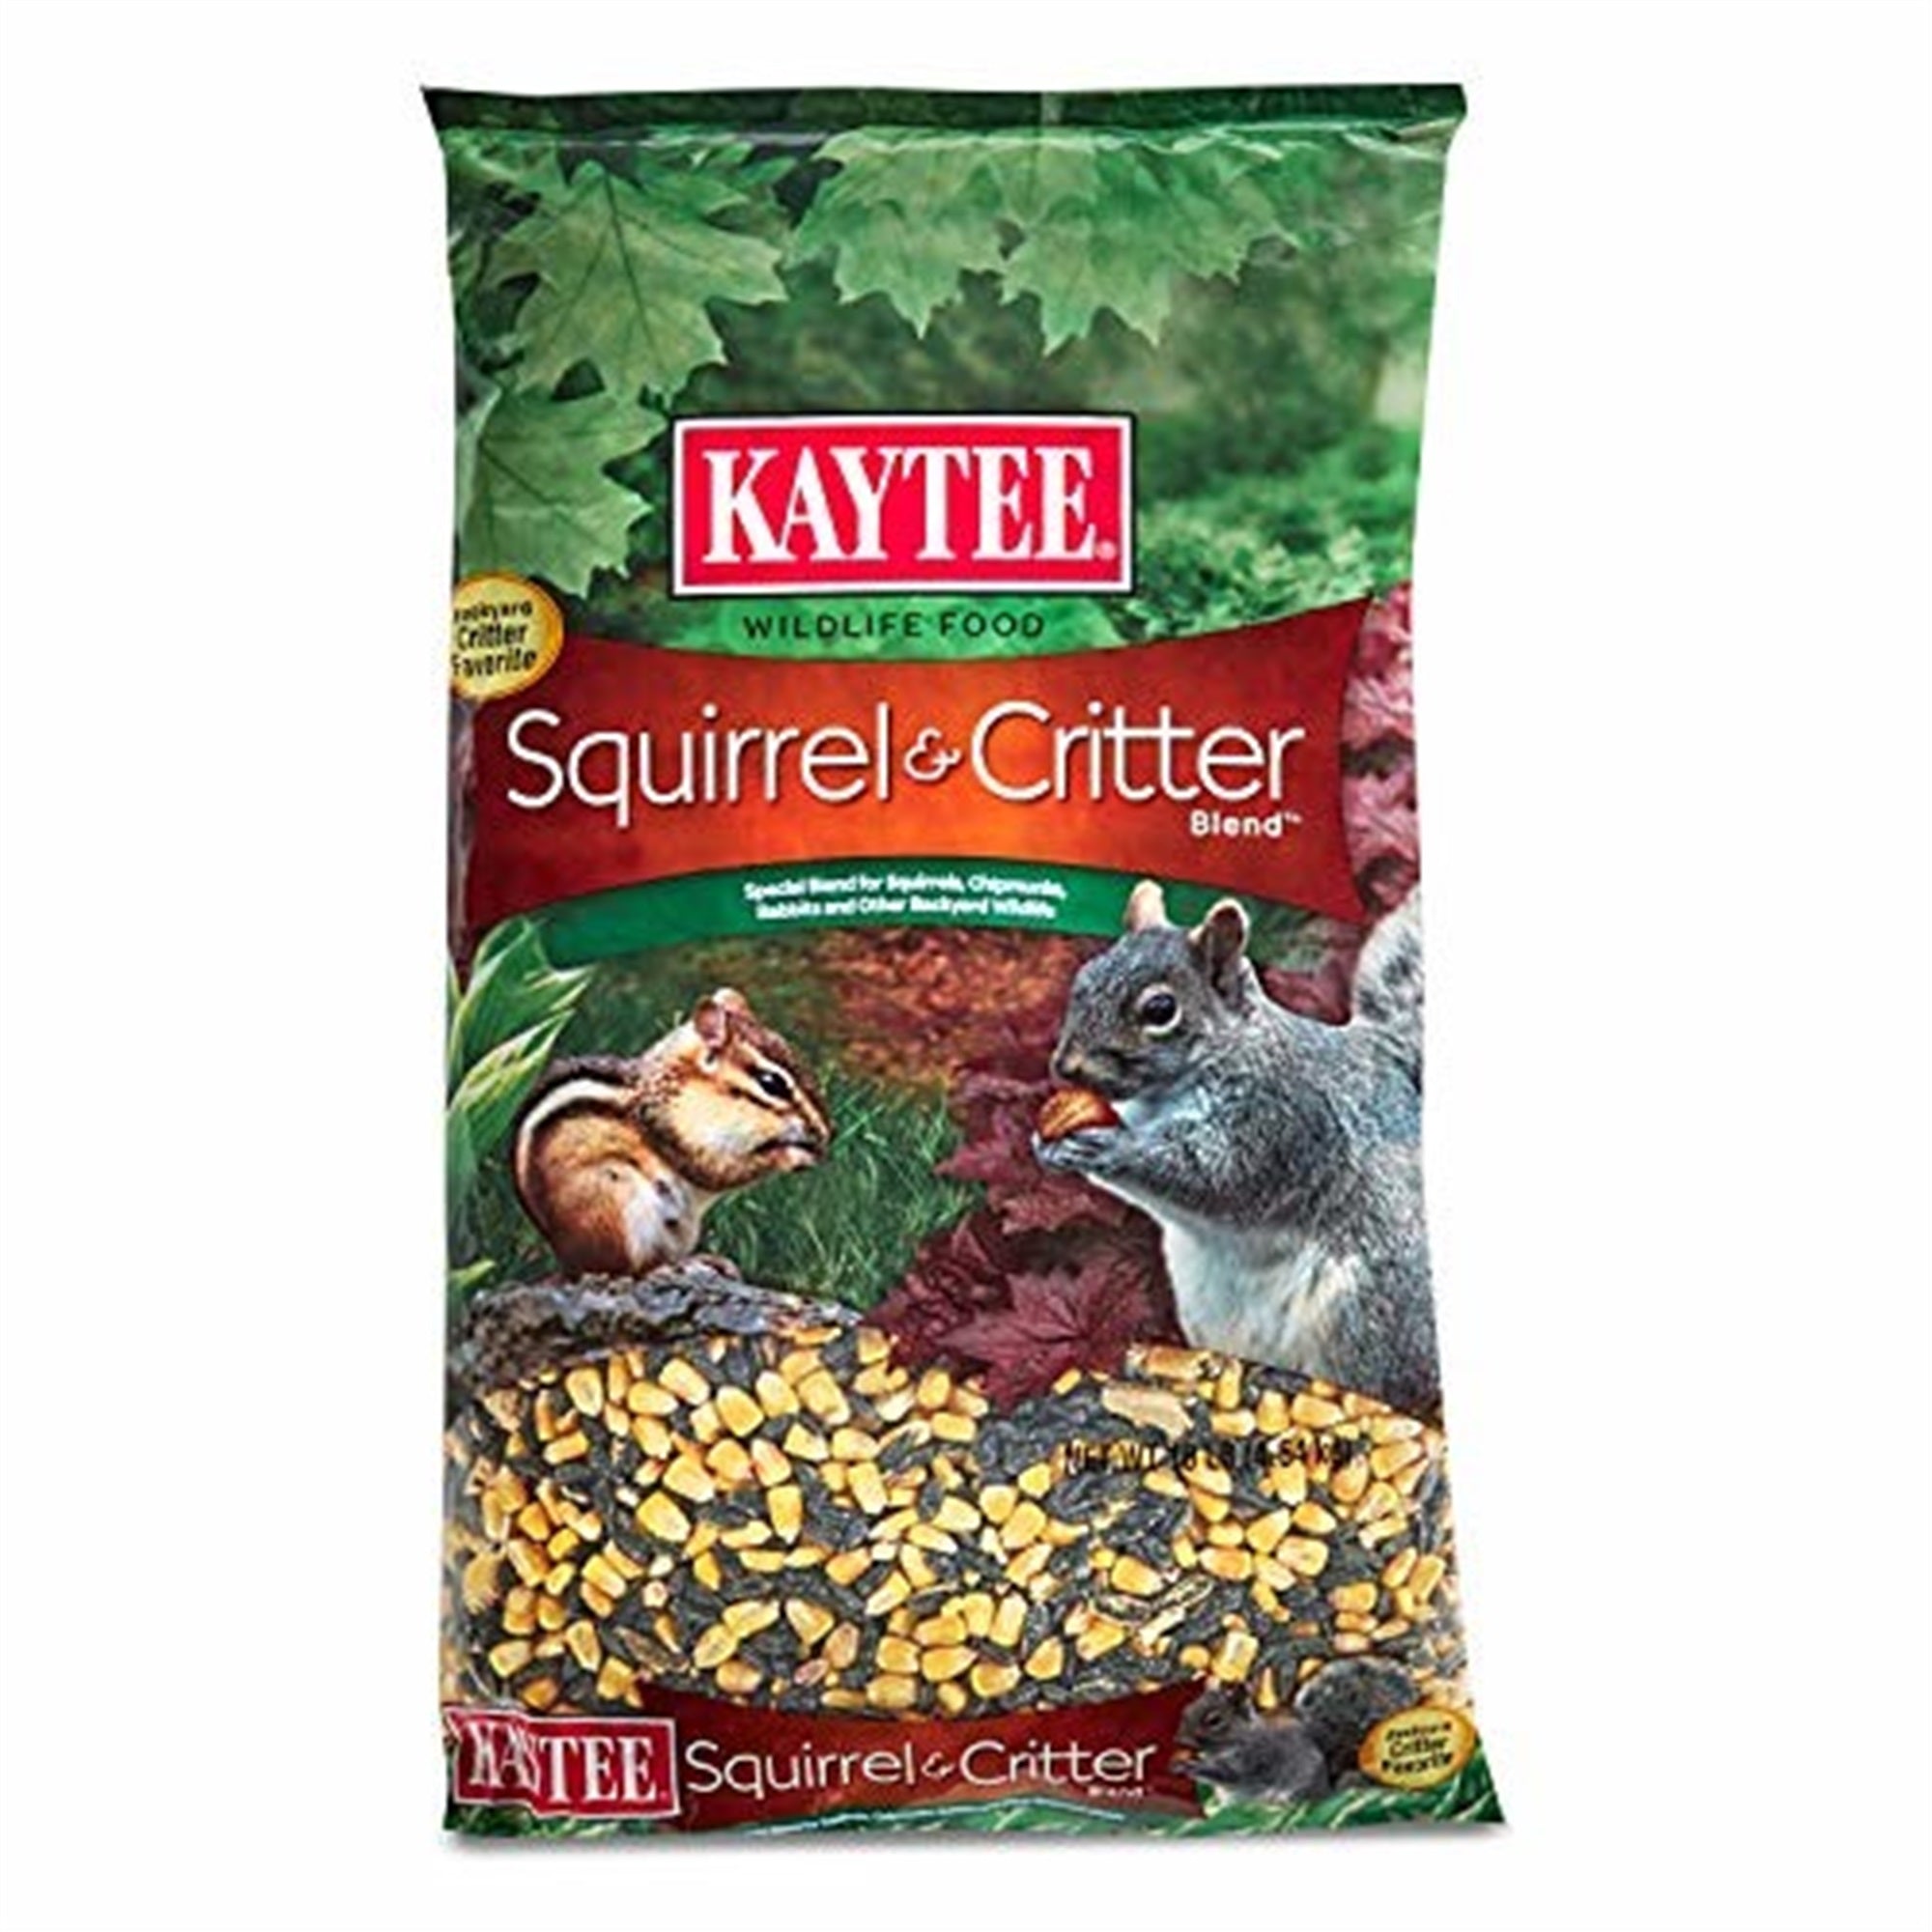 Kaytee 100061937 Squirrel & Critter Blend, 10 lb